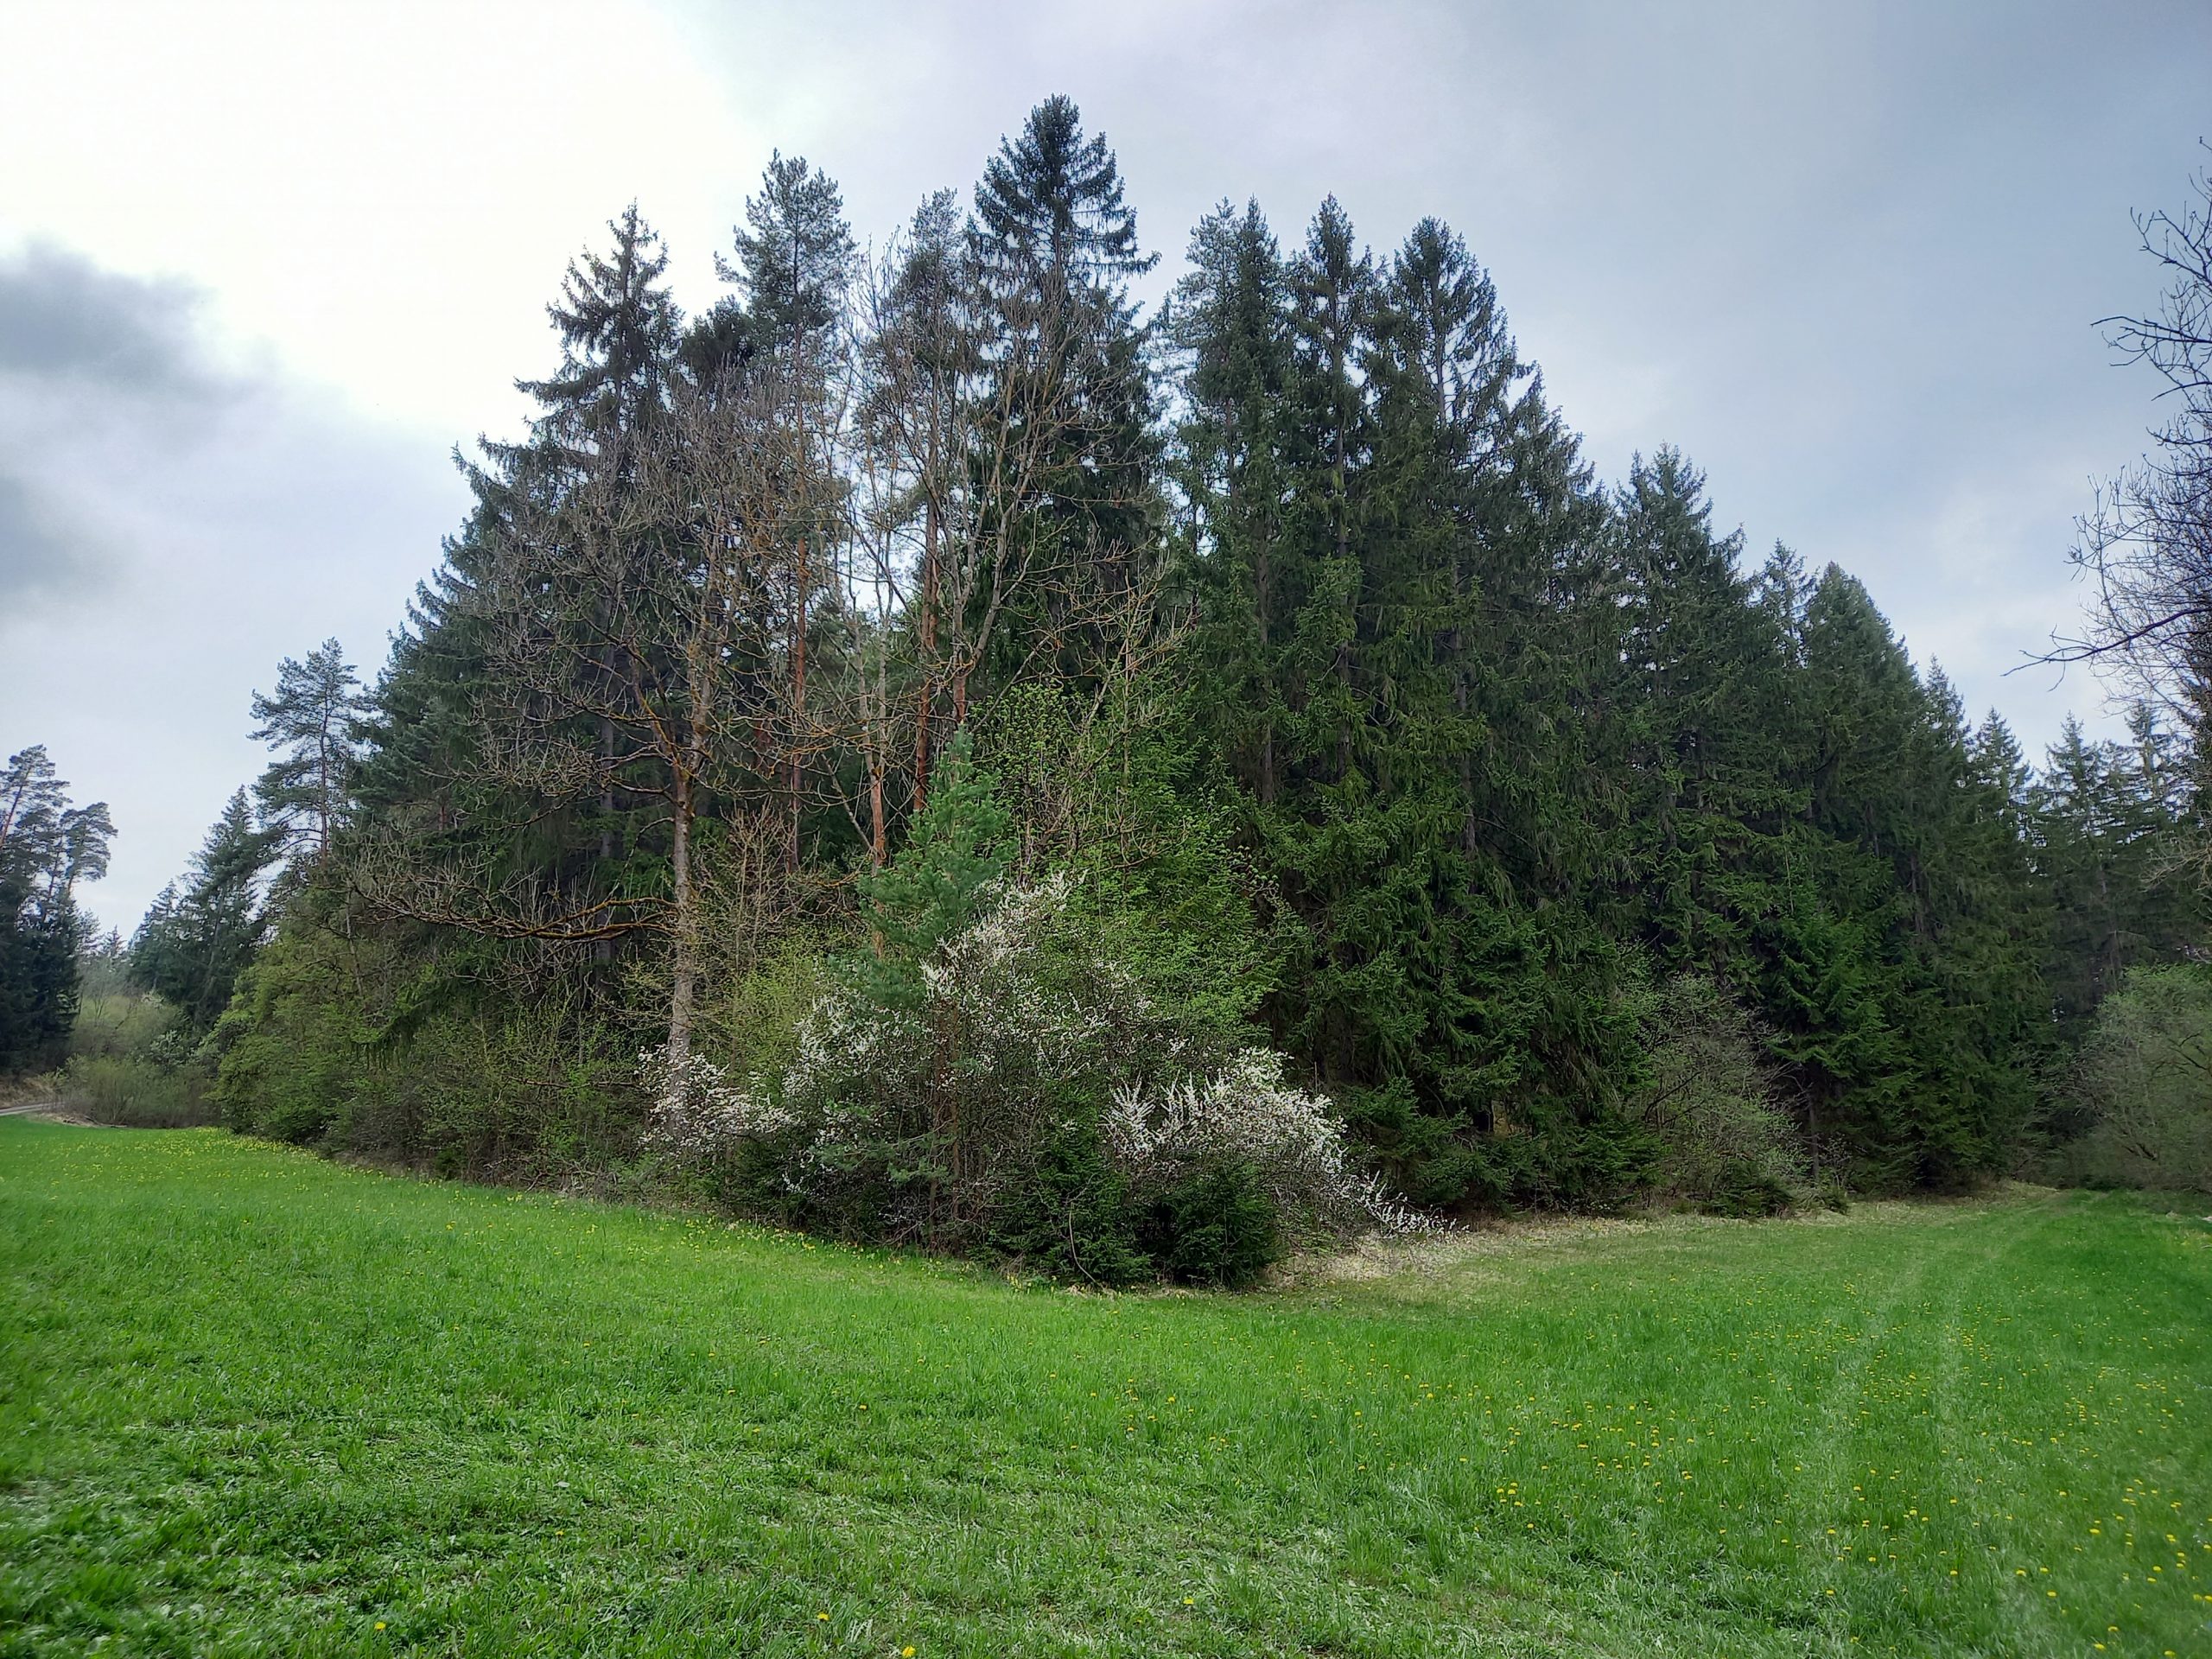 Immobilien Brandt, Referenz Wald Thüringen